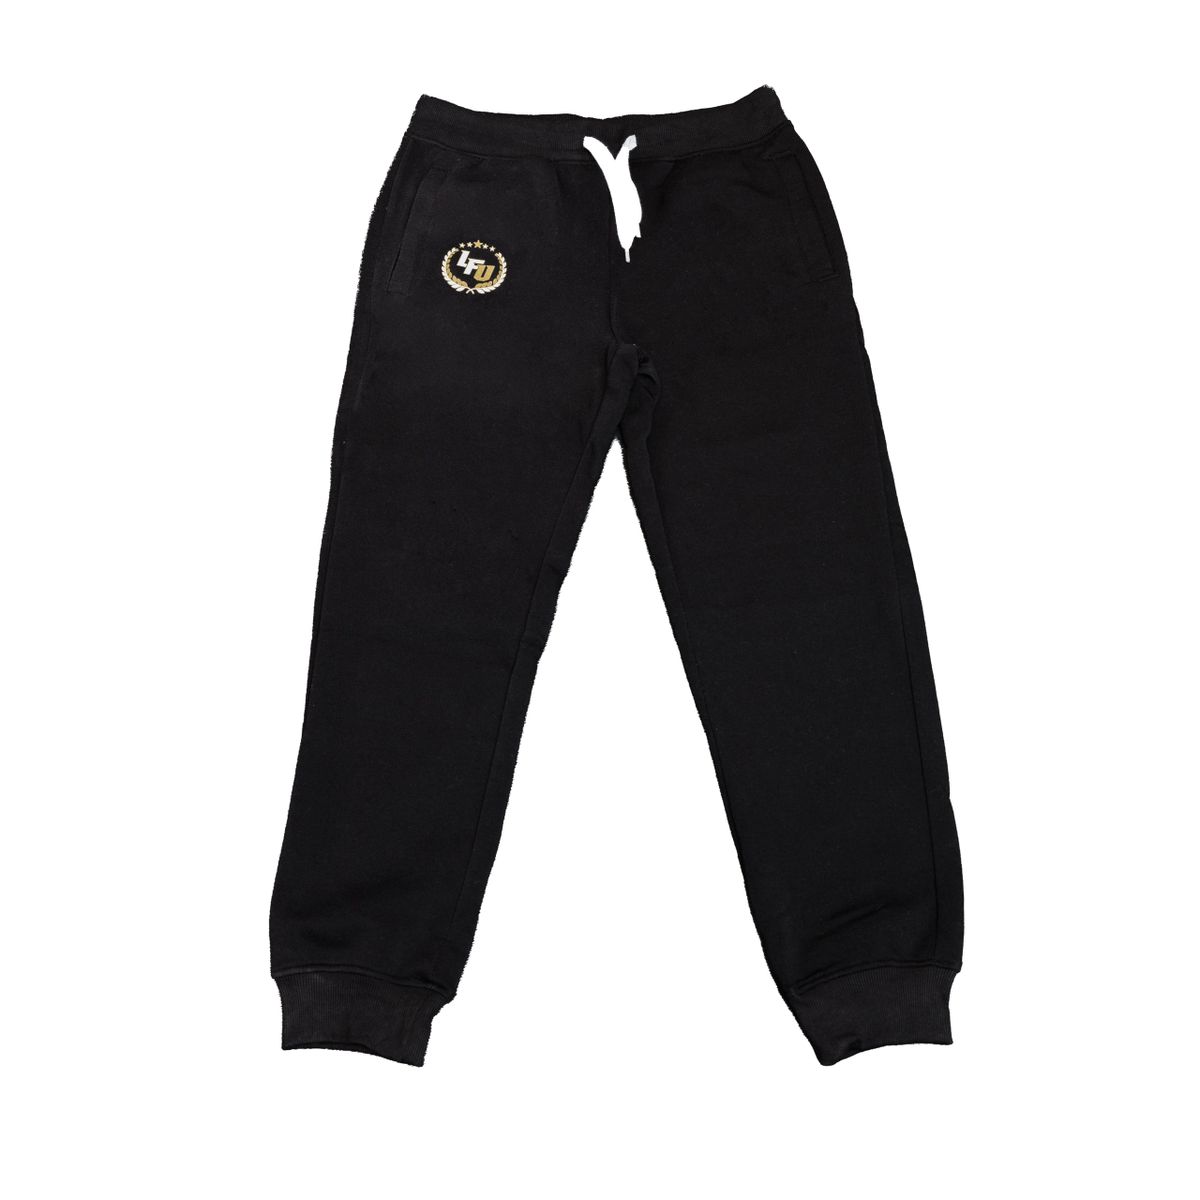 LFU Emblem Sweat Pants Black, Gold Outline